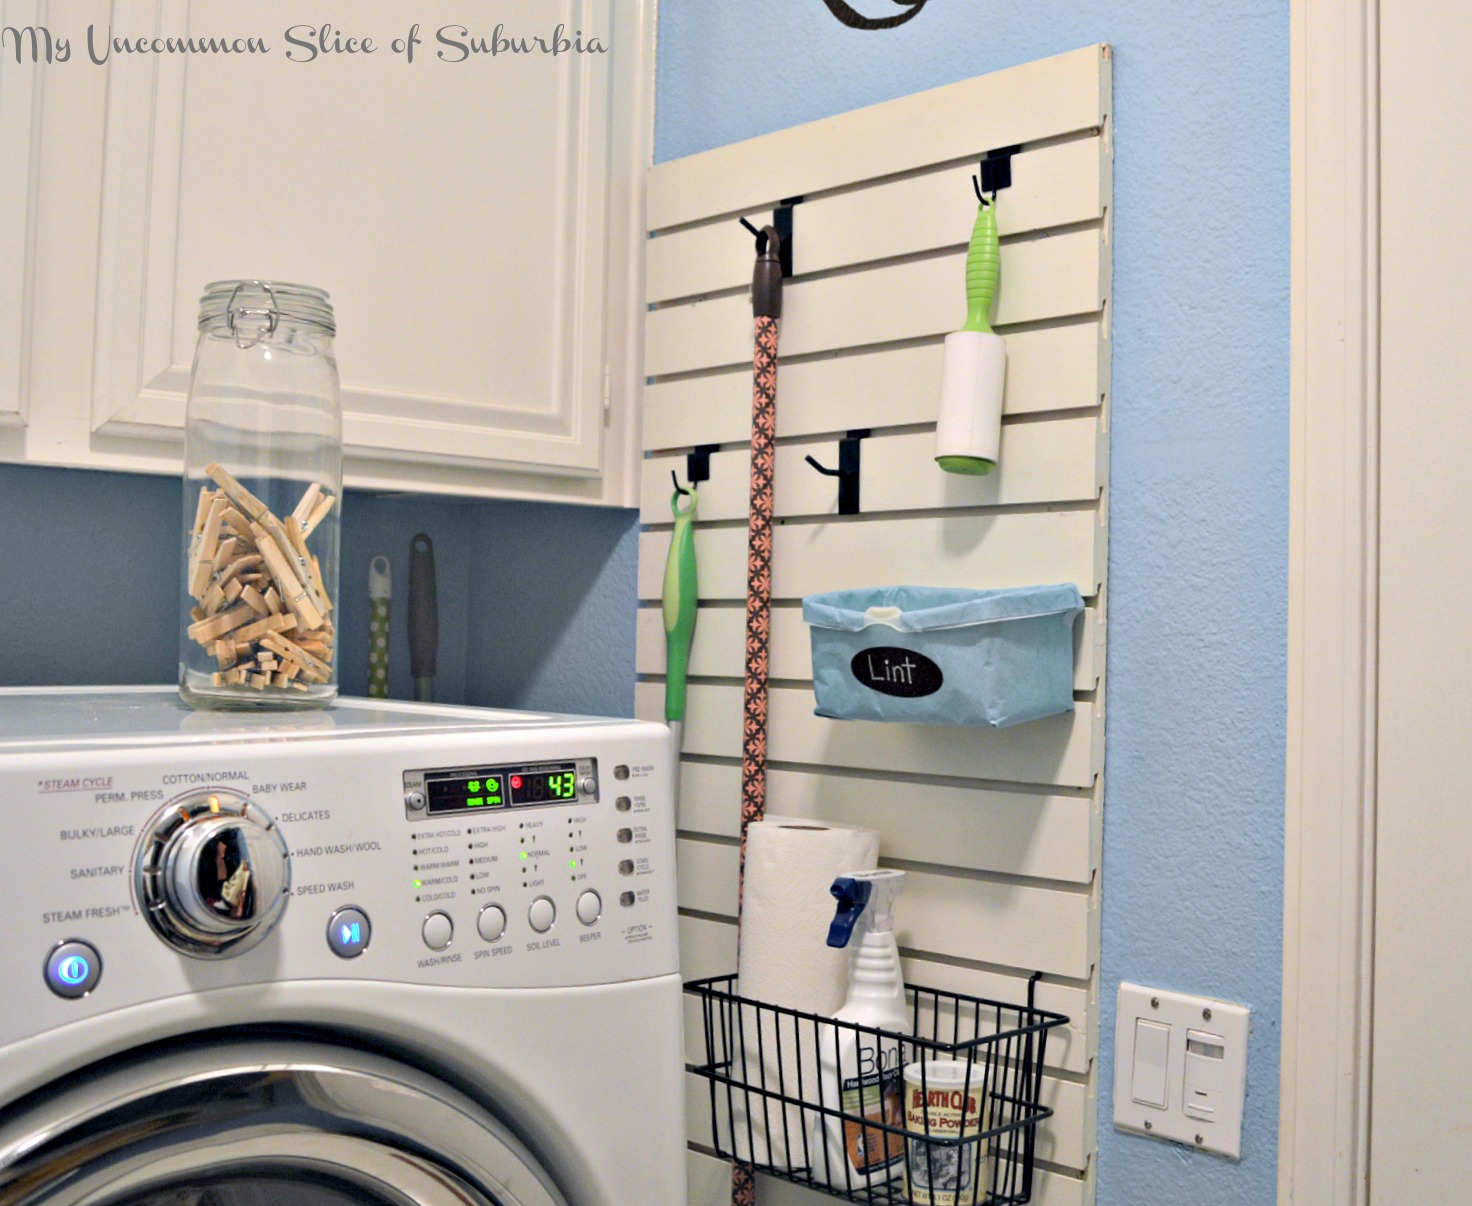 Laundry Room Accessories & Storage